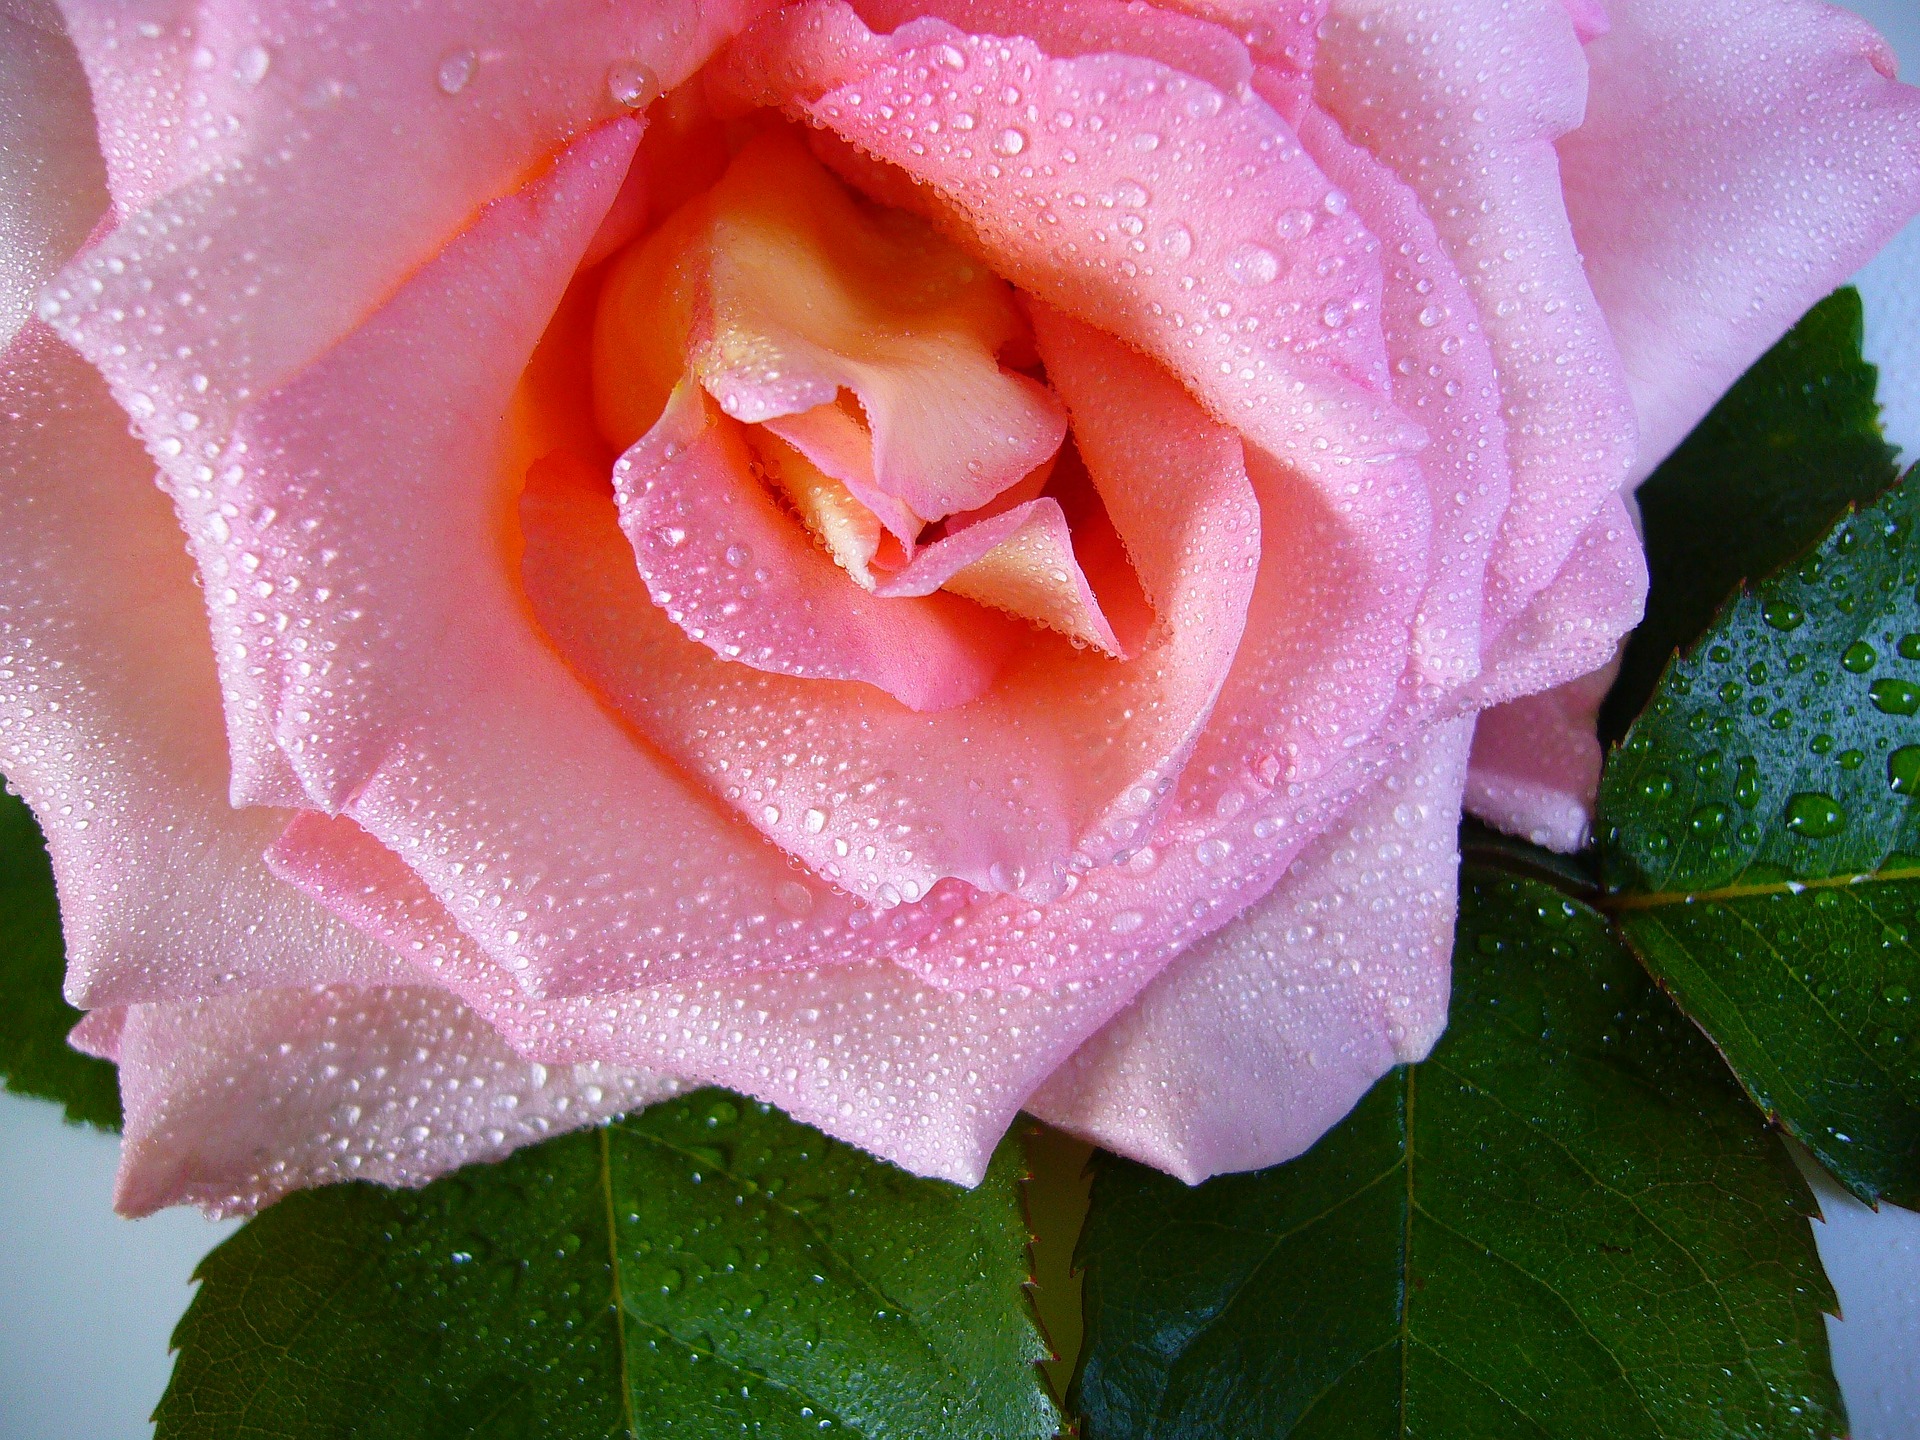 raindrop-rose-57478_1920.jpg